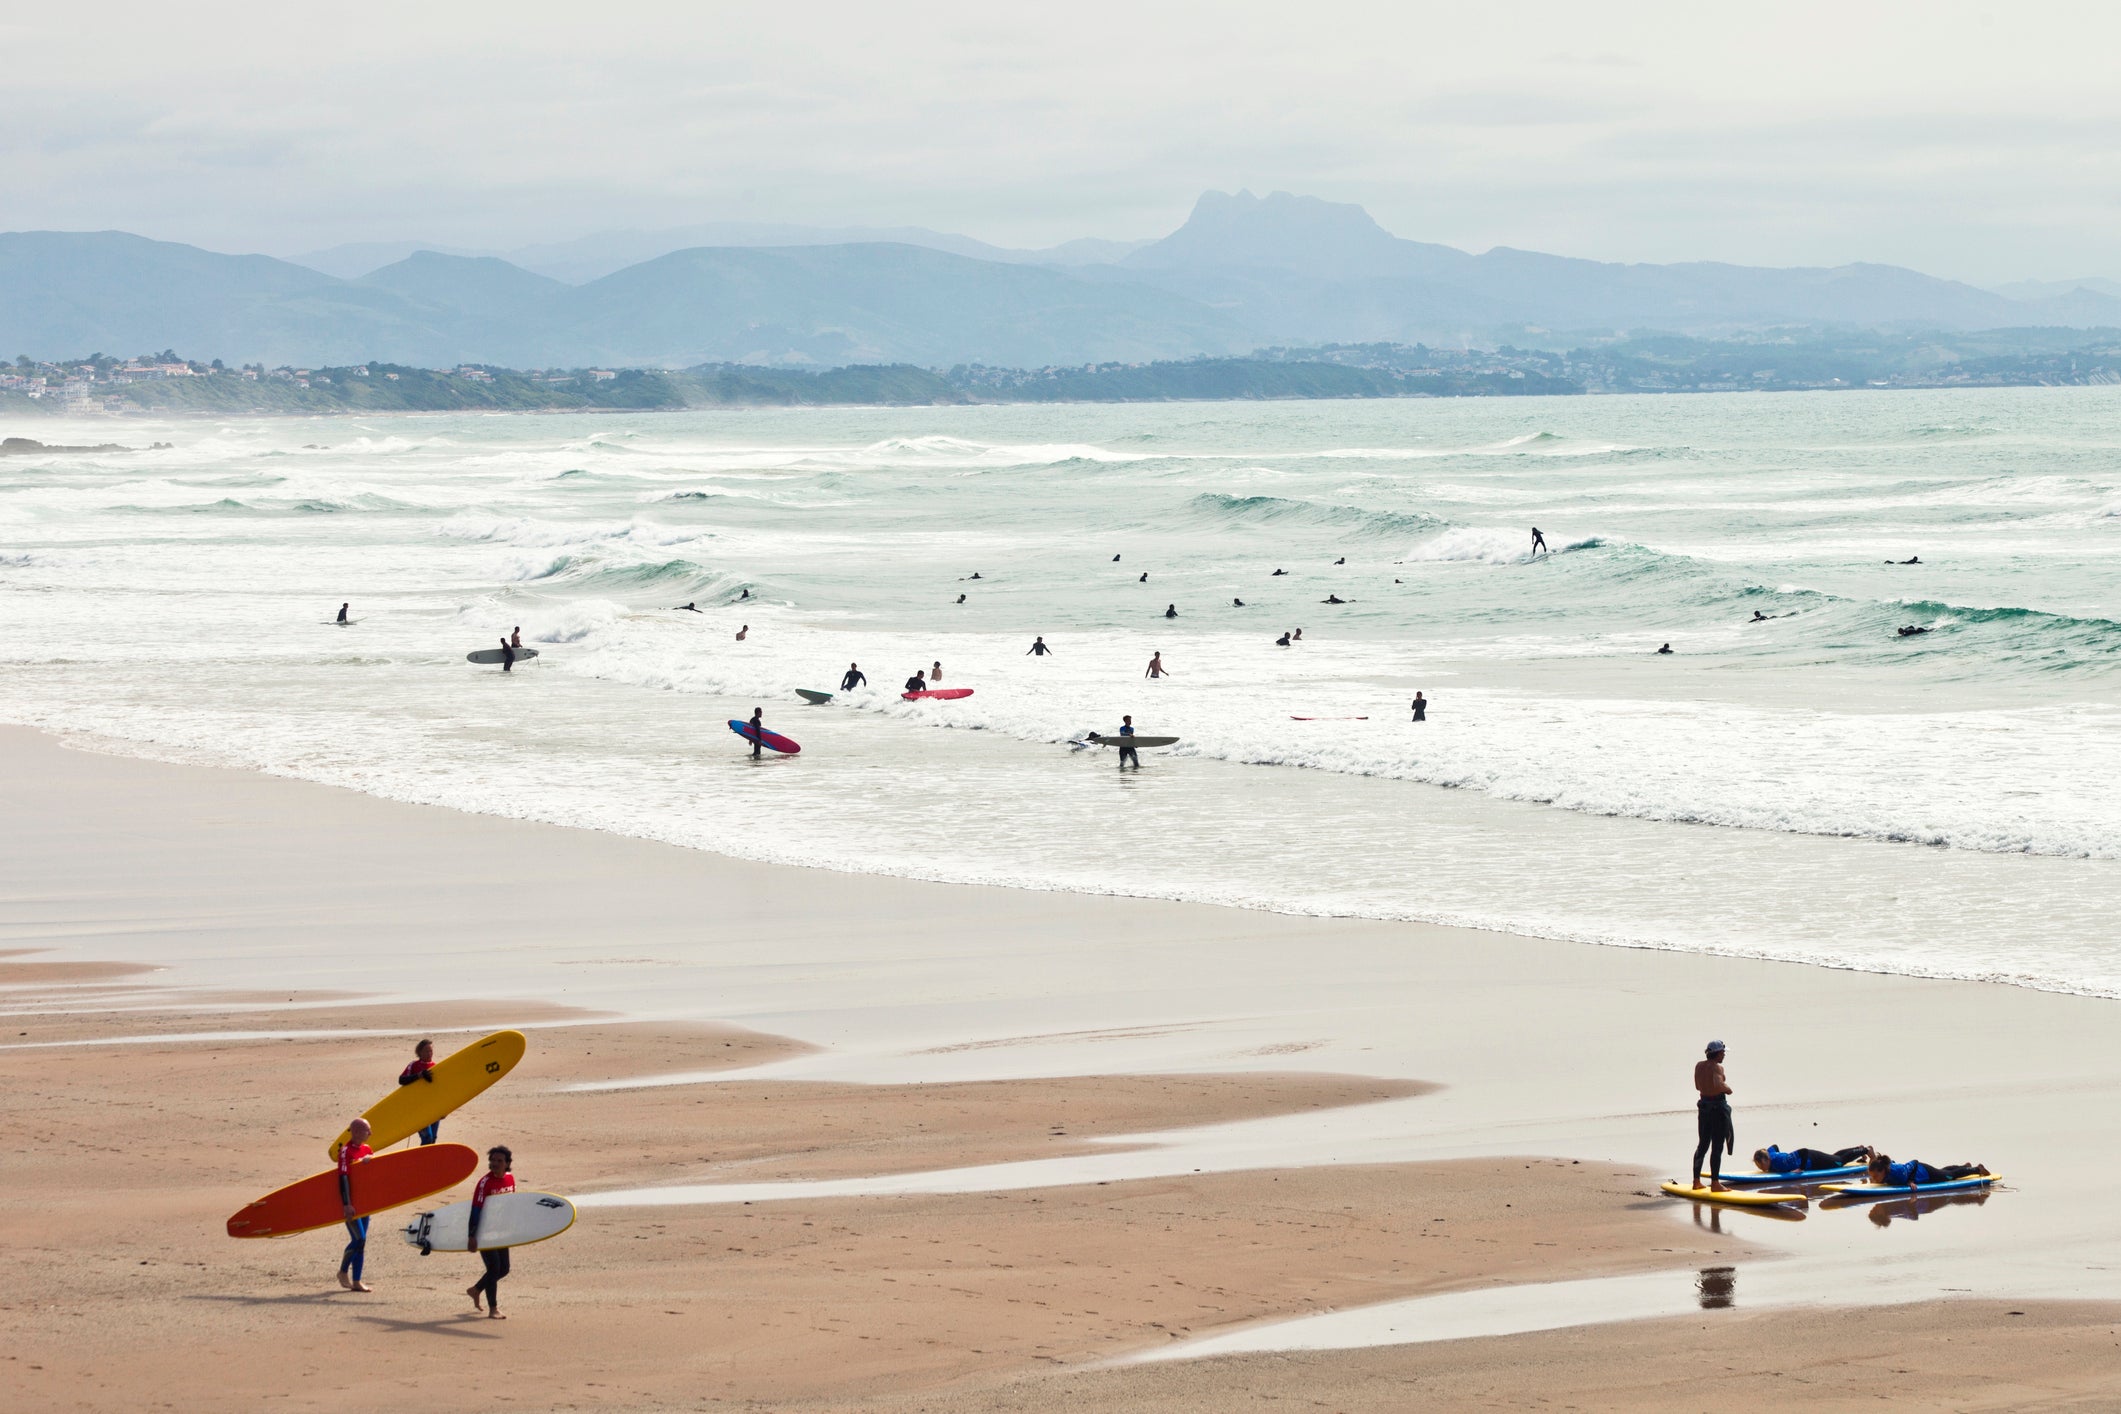 Surfers catch the waves at La Cote des Basques beach in Biarritz